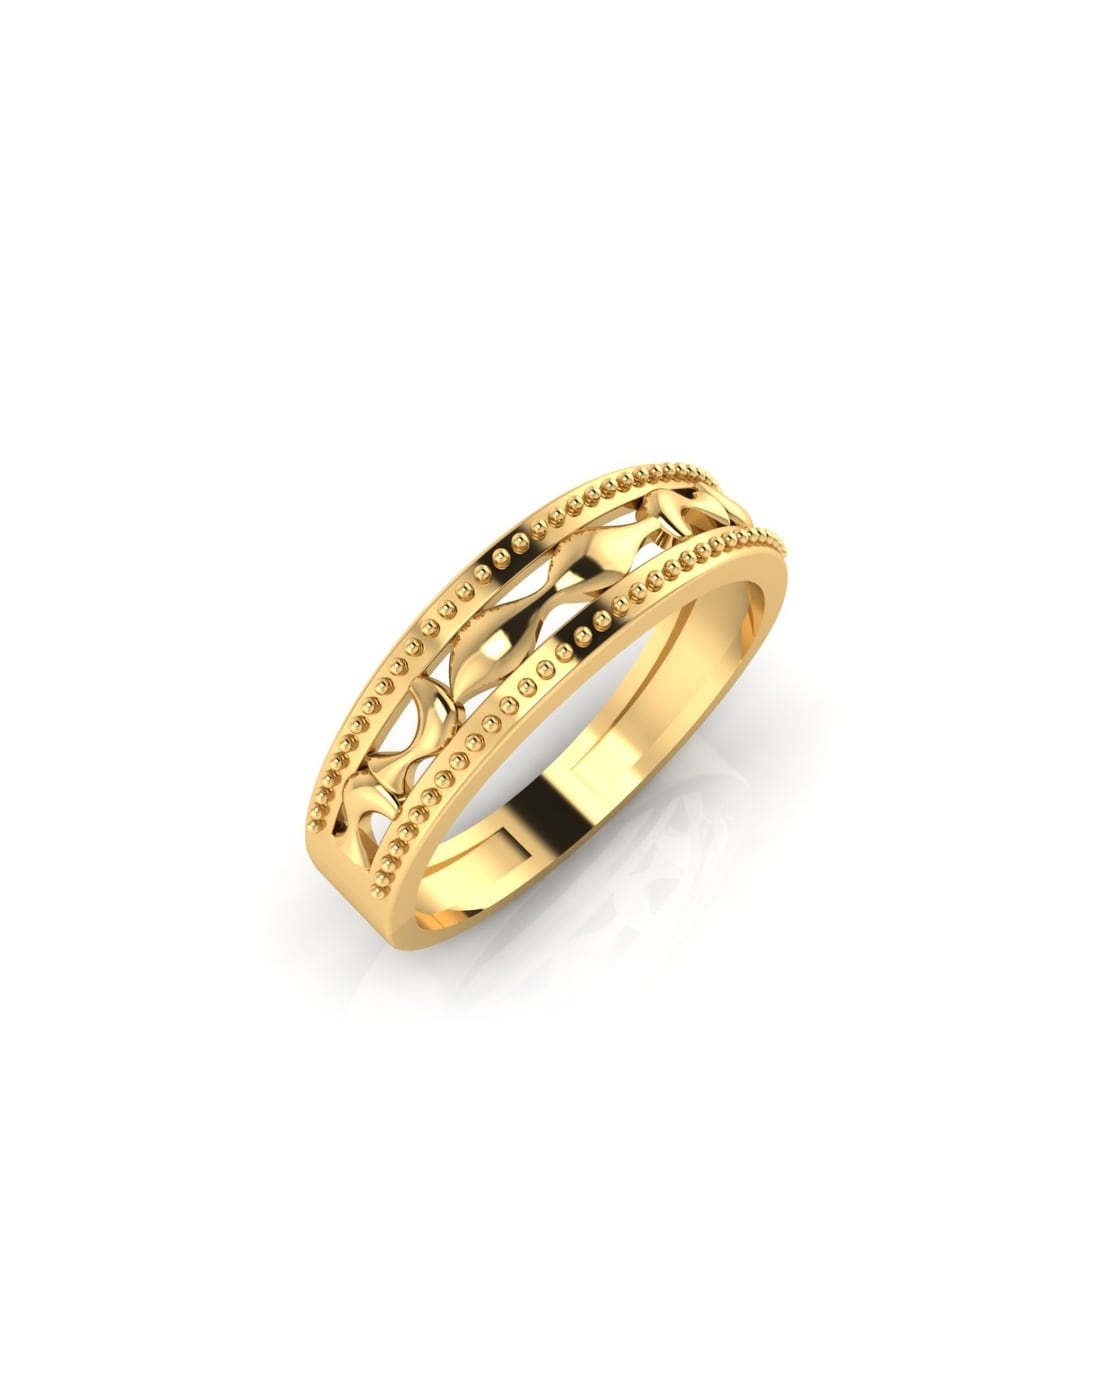 S -247 Glassy Gold Diamond Rings -Glassy Gold Diamond Rings| Surat Diamond  Jewelry